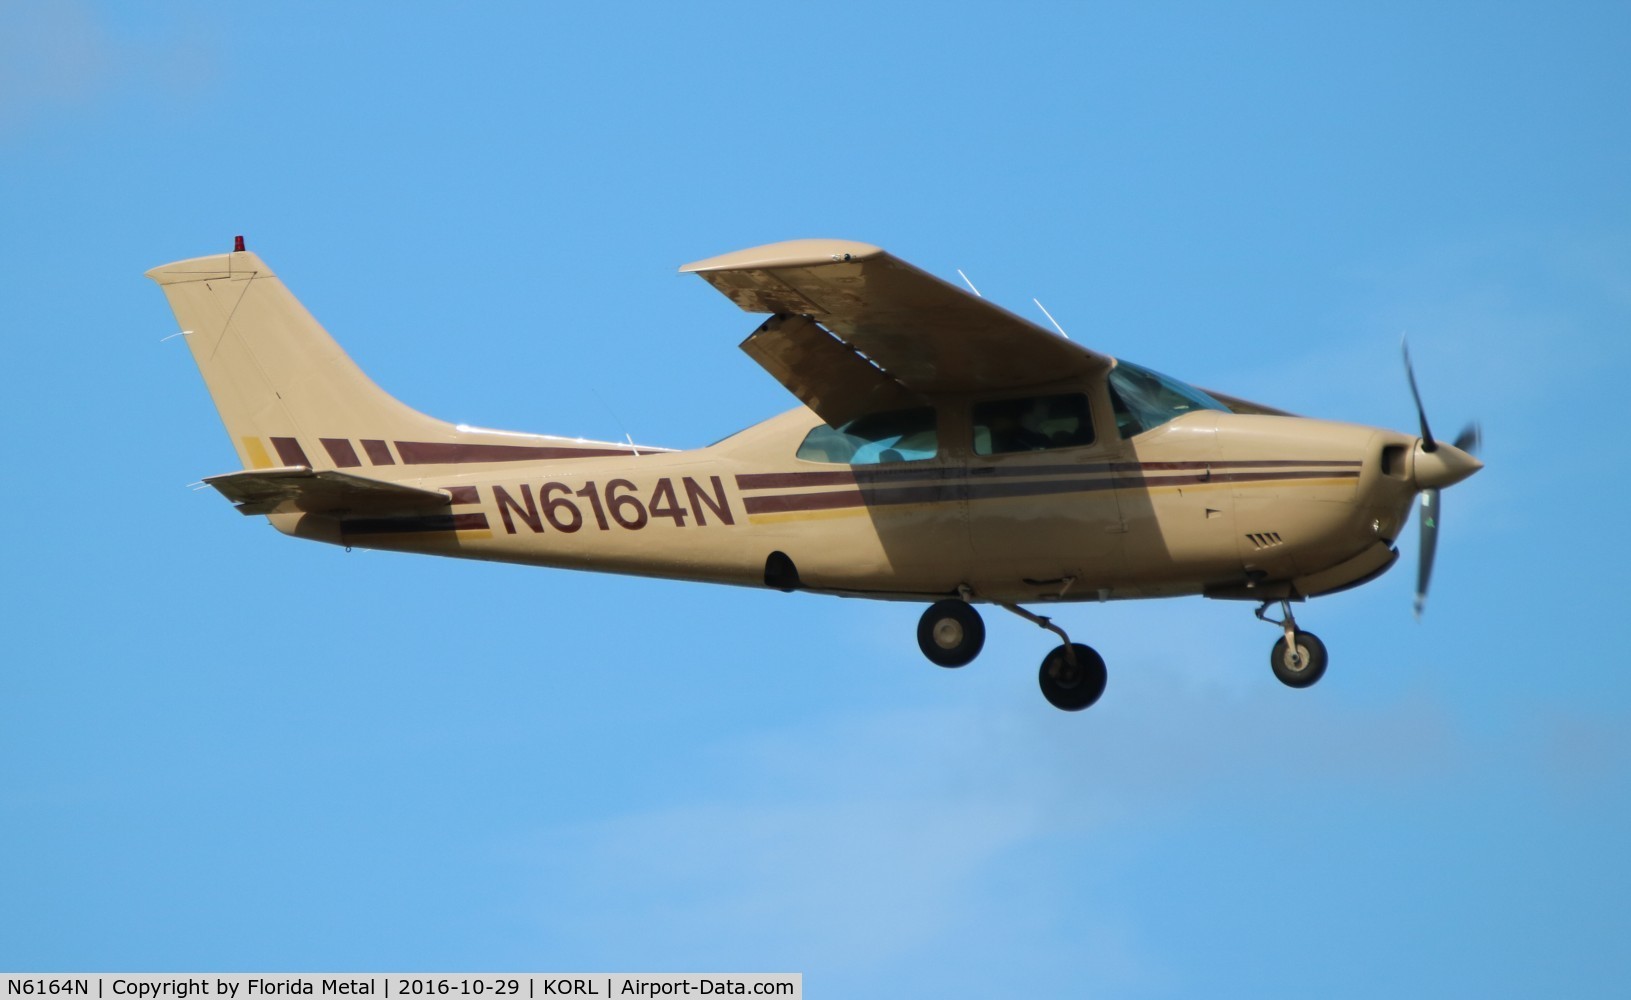 N6164N, 1978 Cessna 210M Centurion C/N 21062935, Cessna 210M